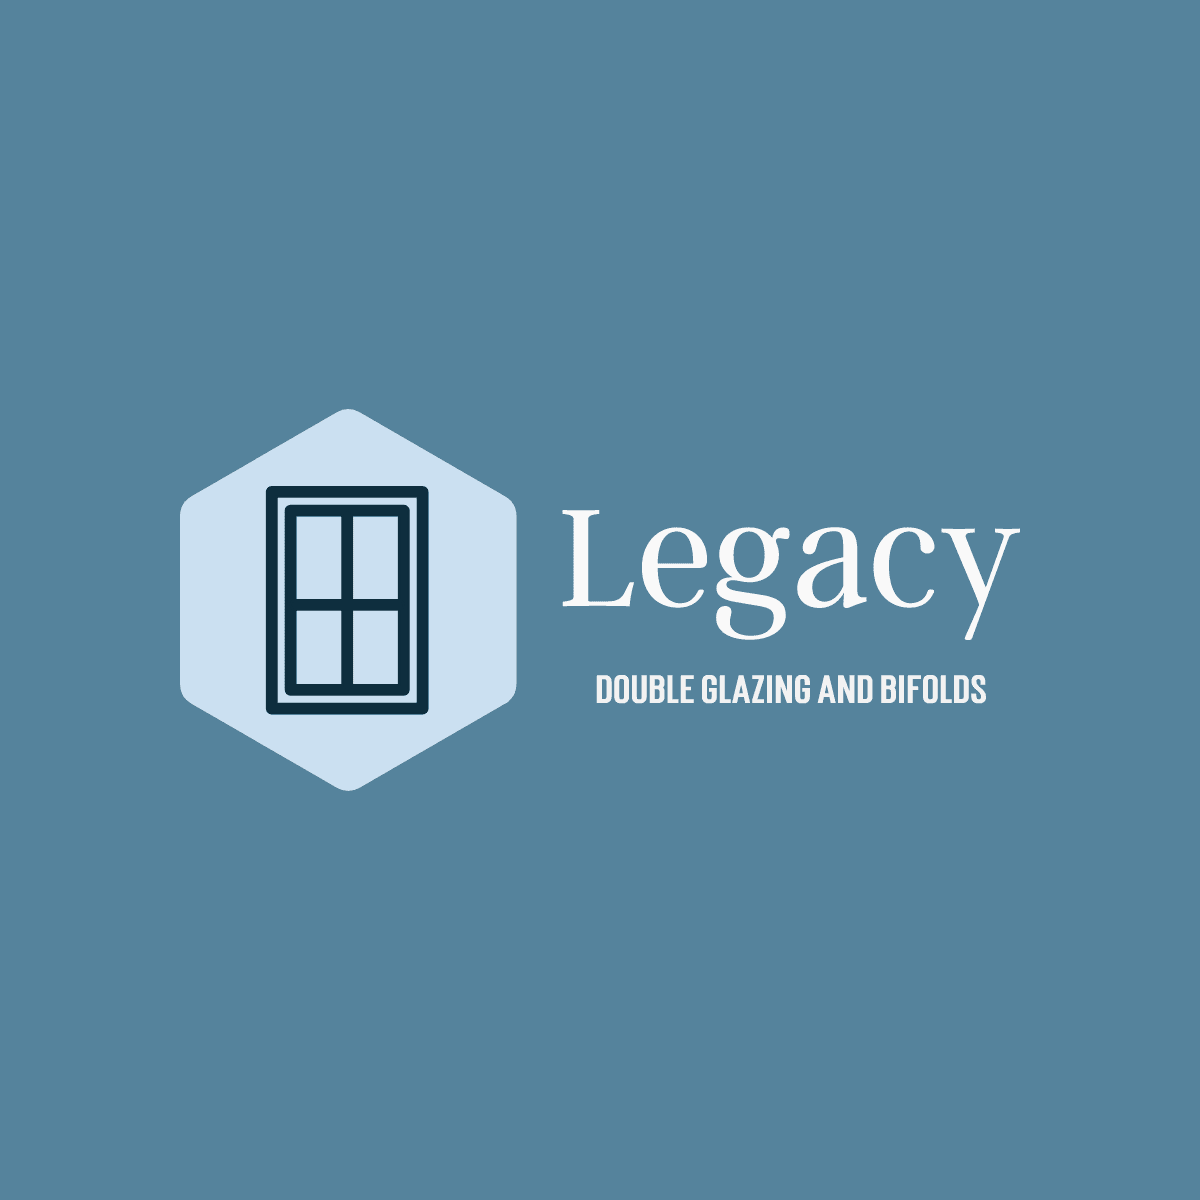 Legacy Double Glazing and Bifolds Logo